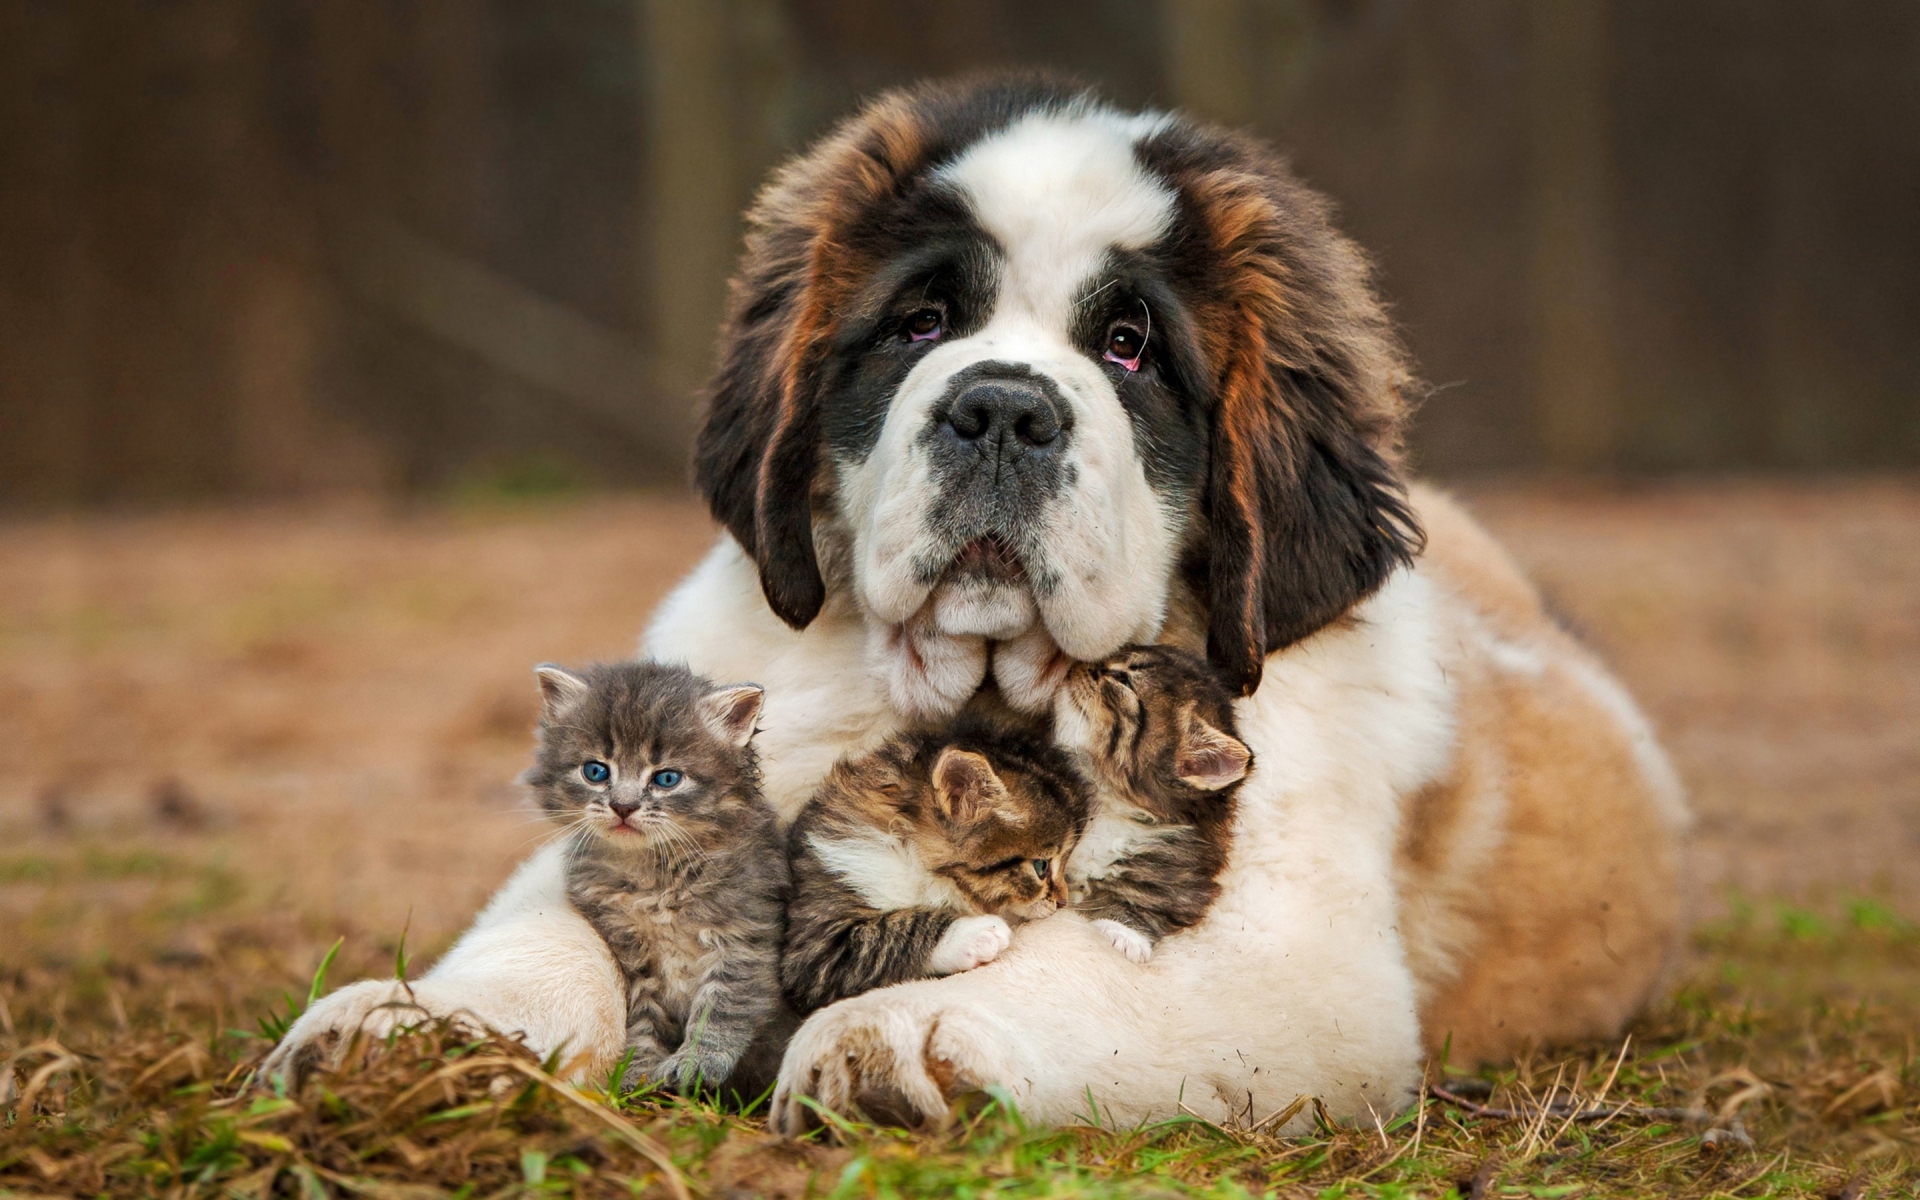 Cat & Dog Picture